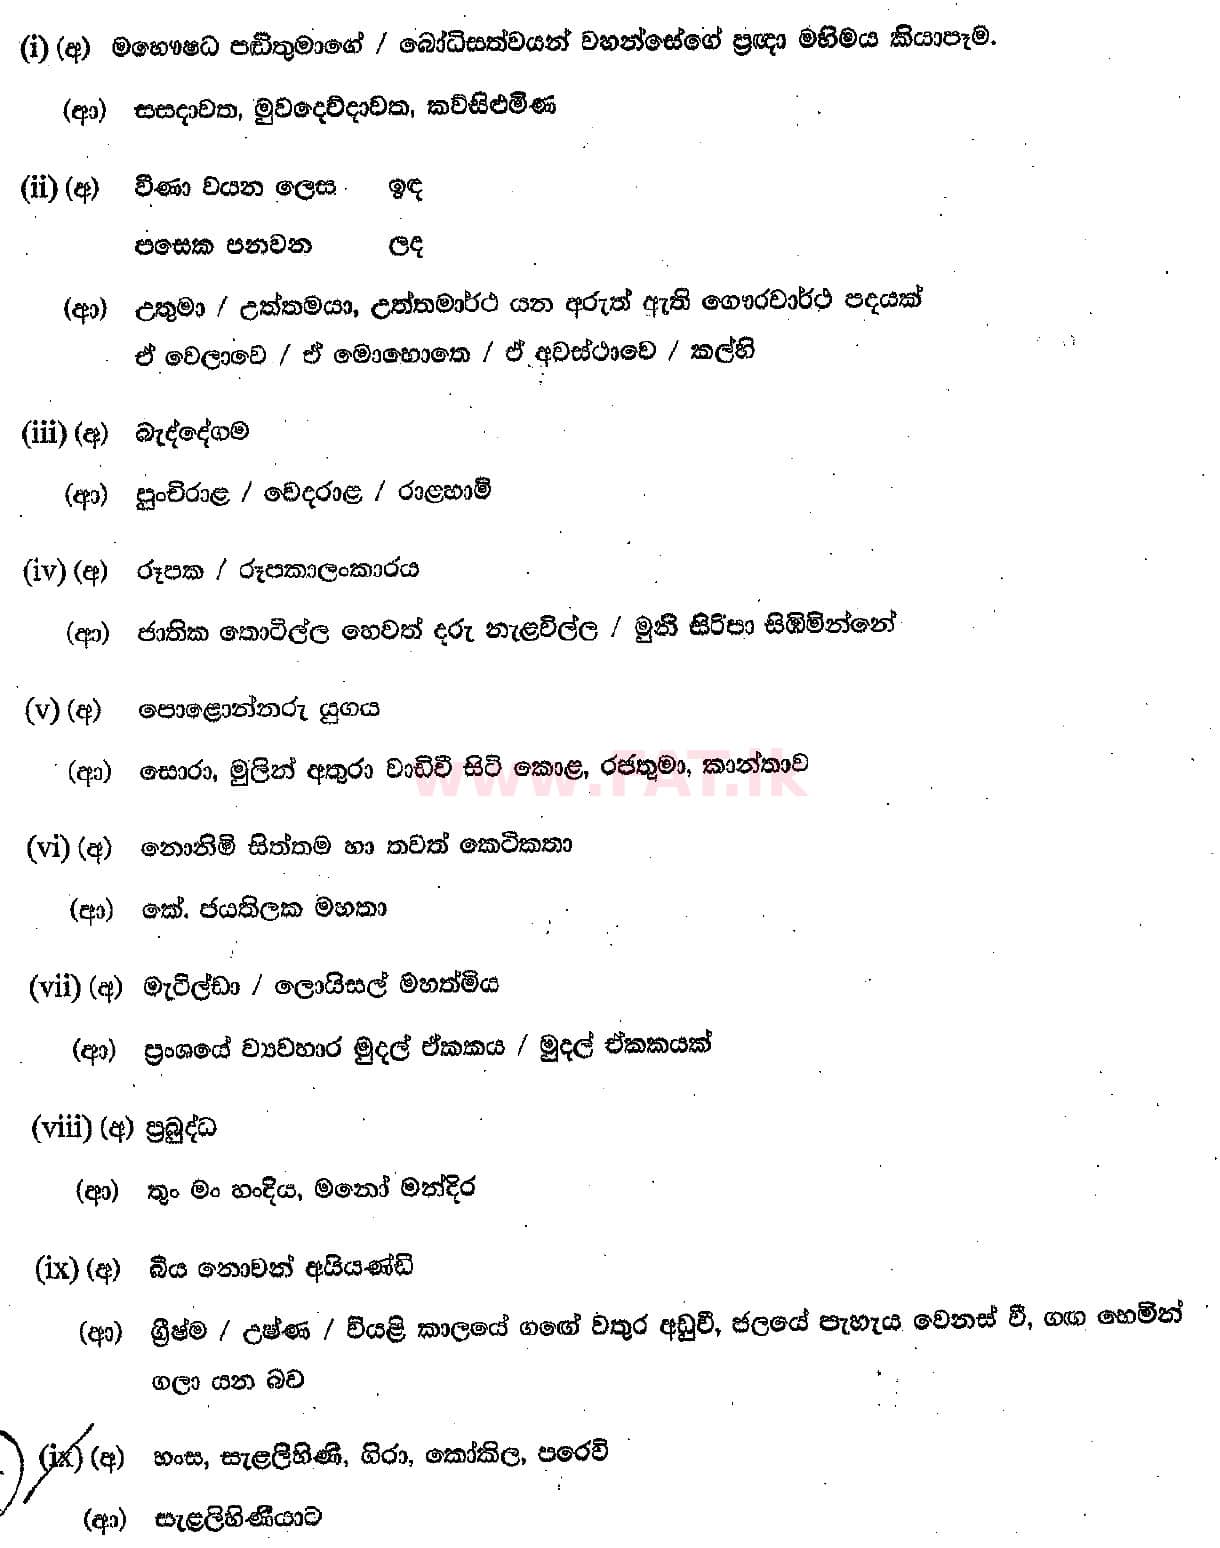 National Syllabus : Ordinary Level (O/L) Sinhala Language and Literature - 2018 December - Paper III (සිංහල Medium) 1 5477